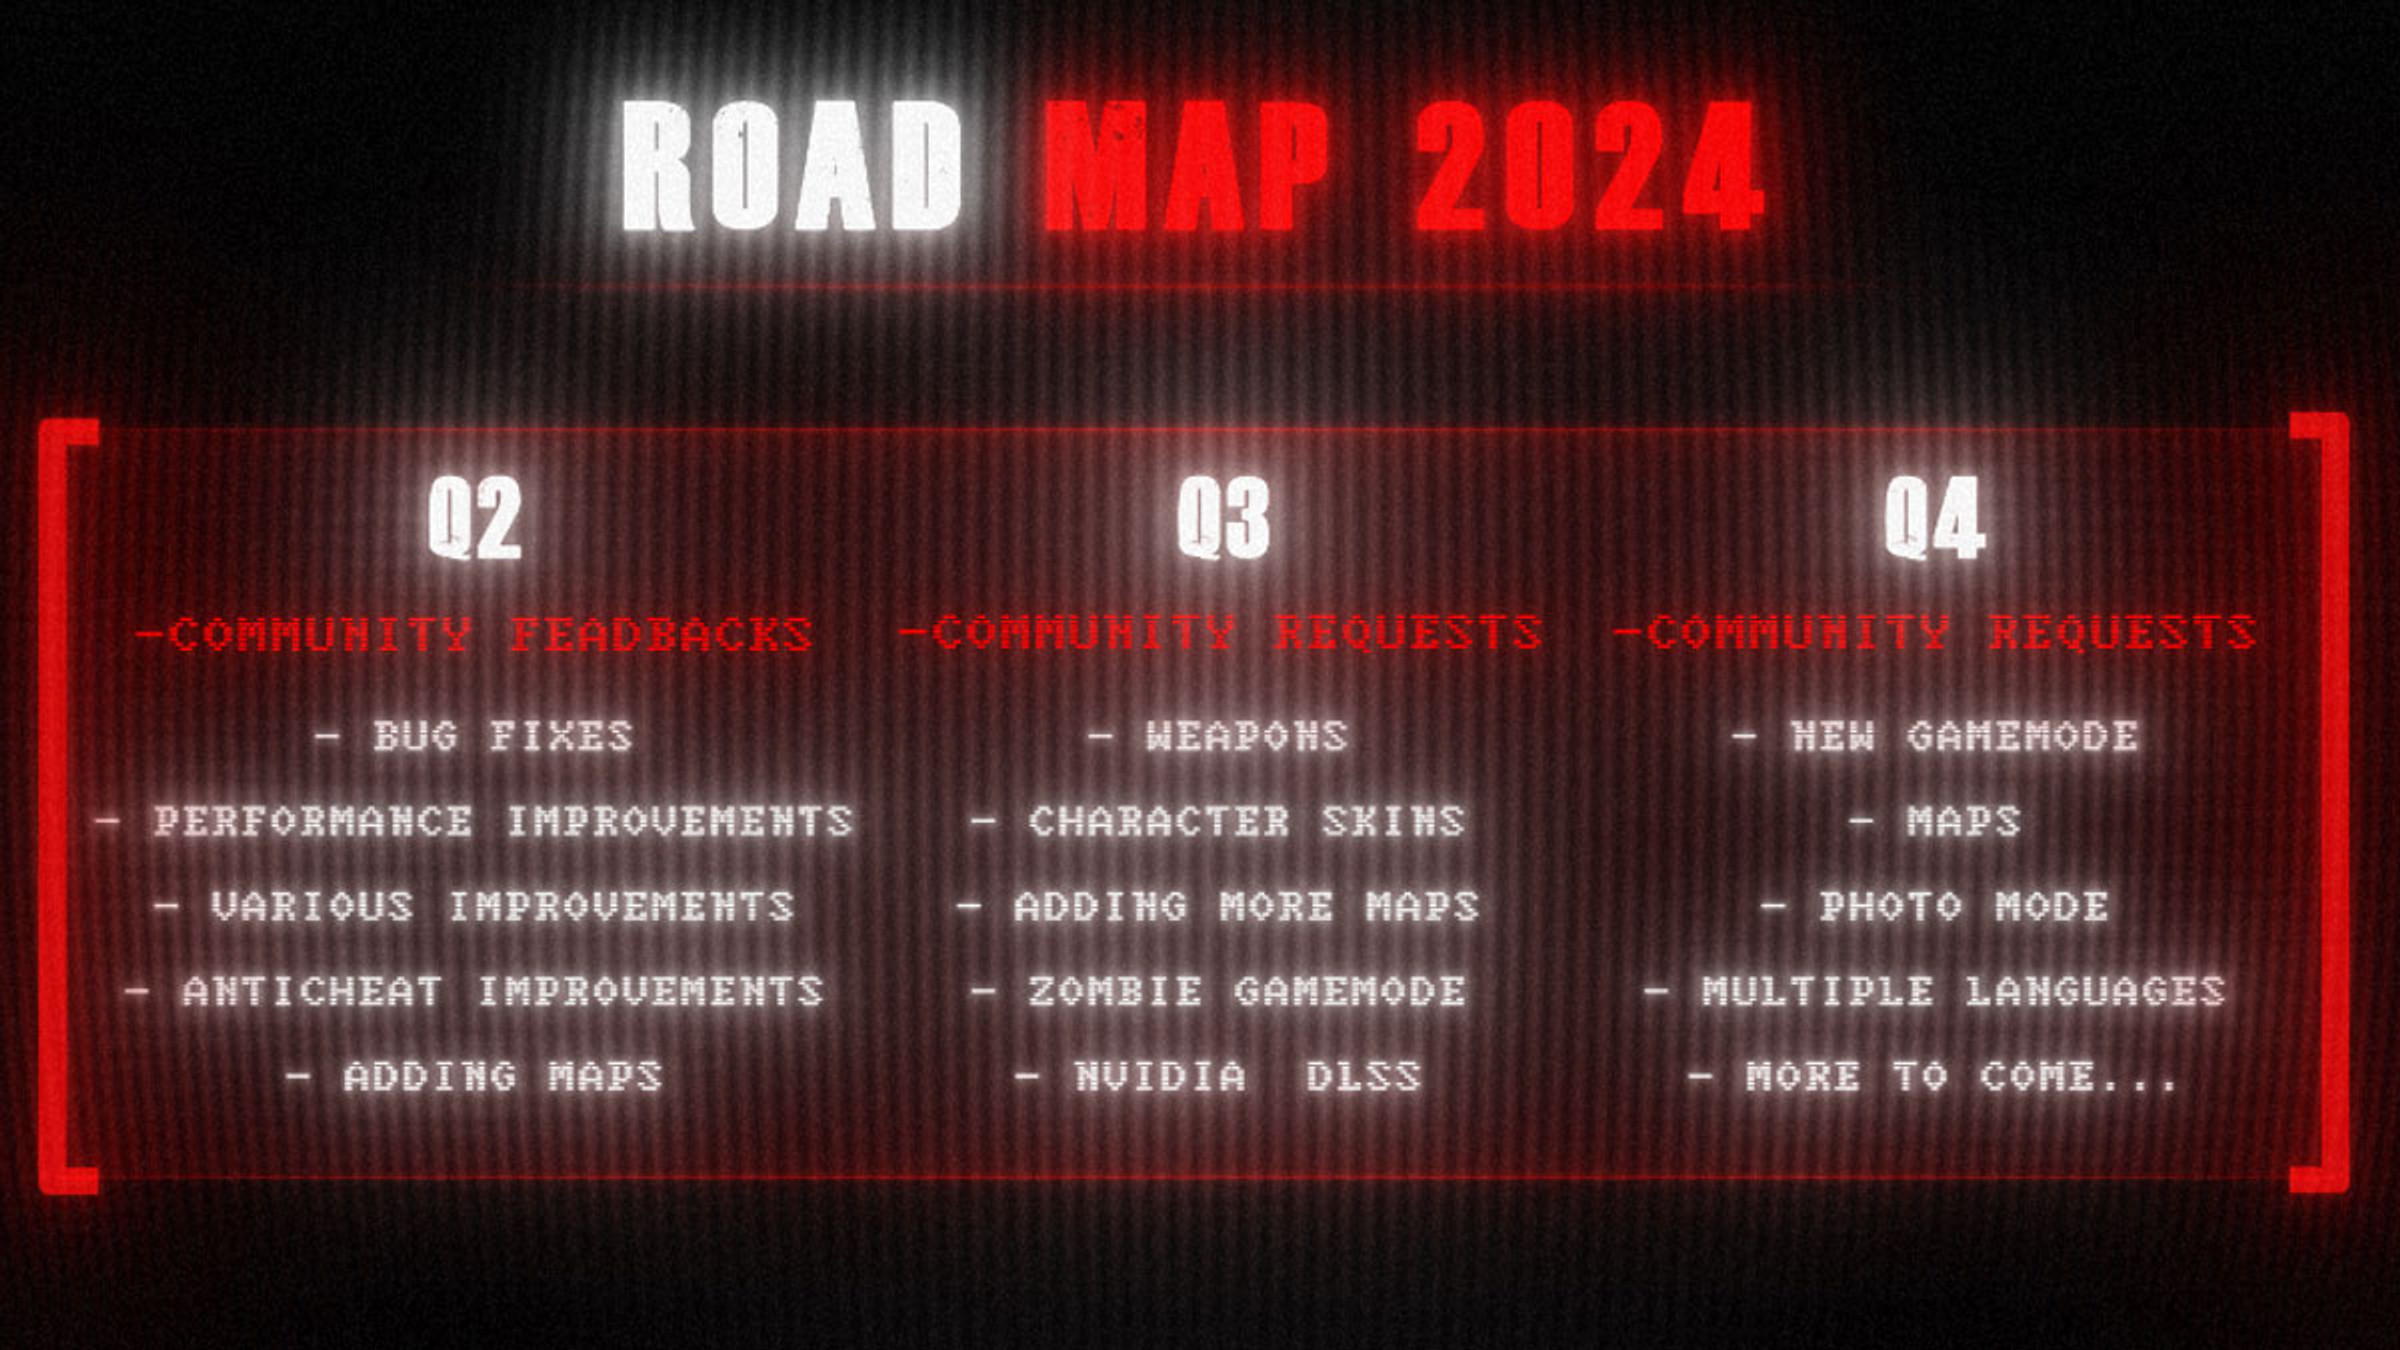 bodycam-roadmap-2024